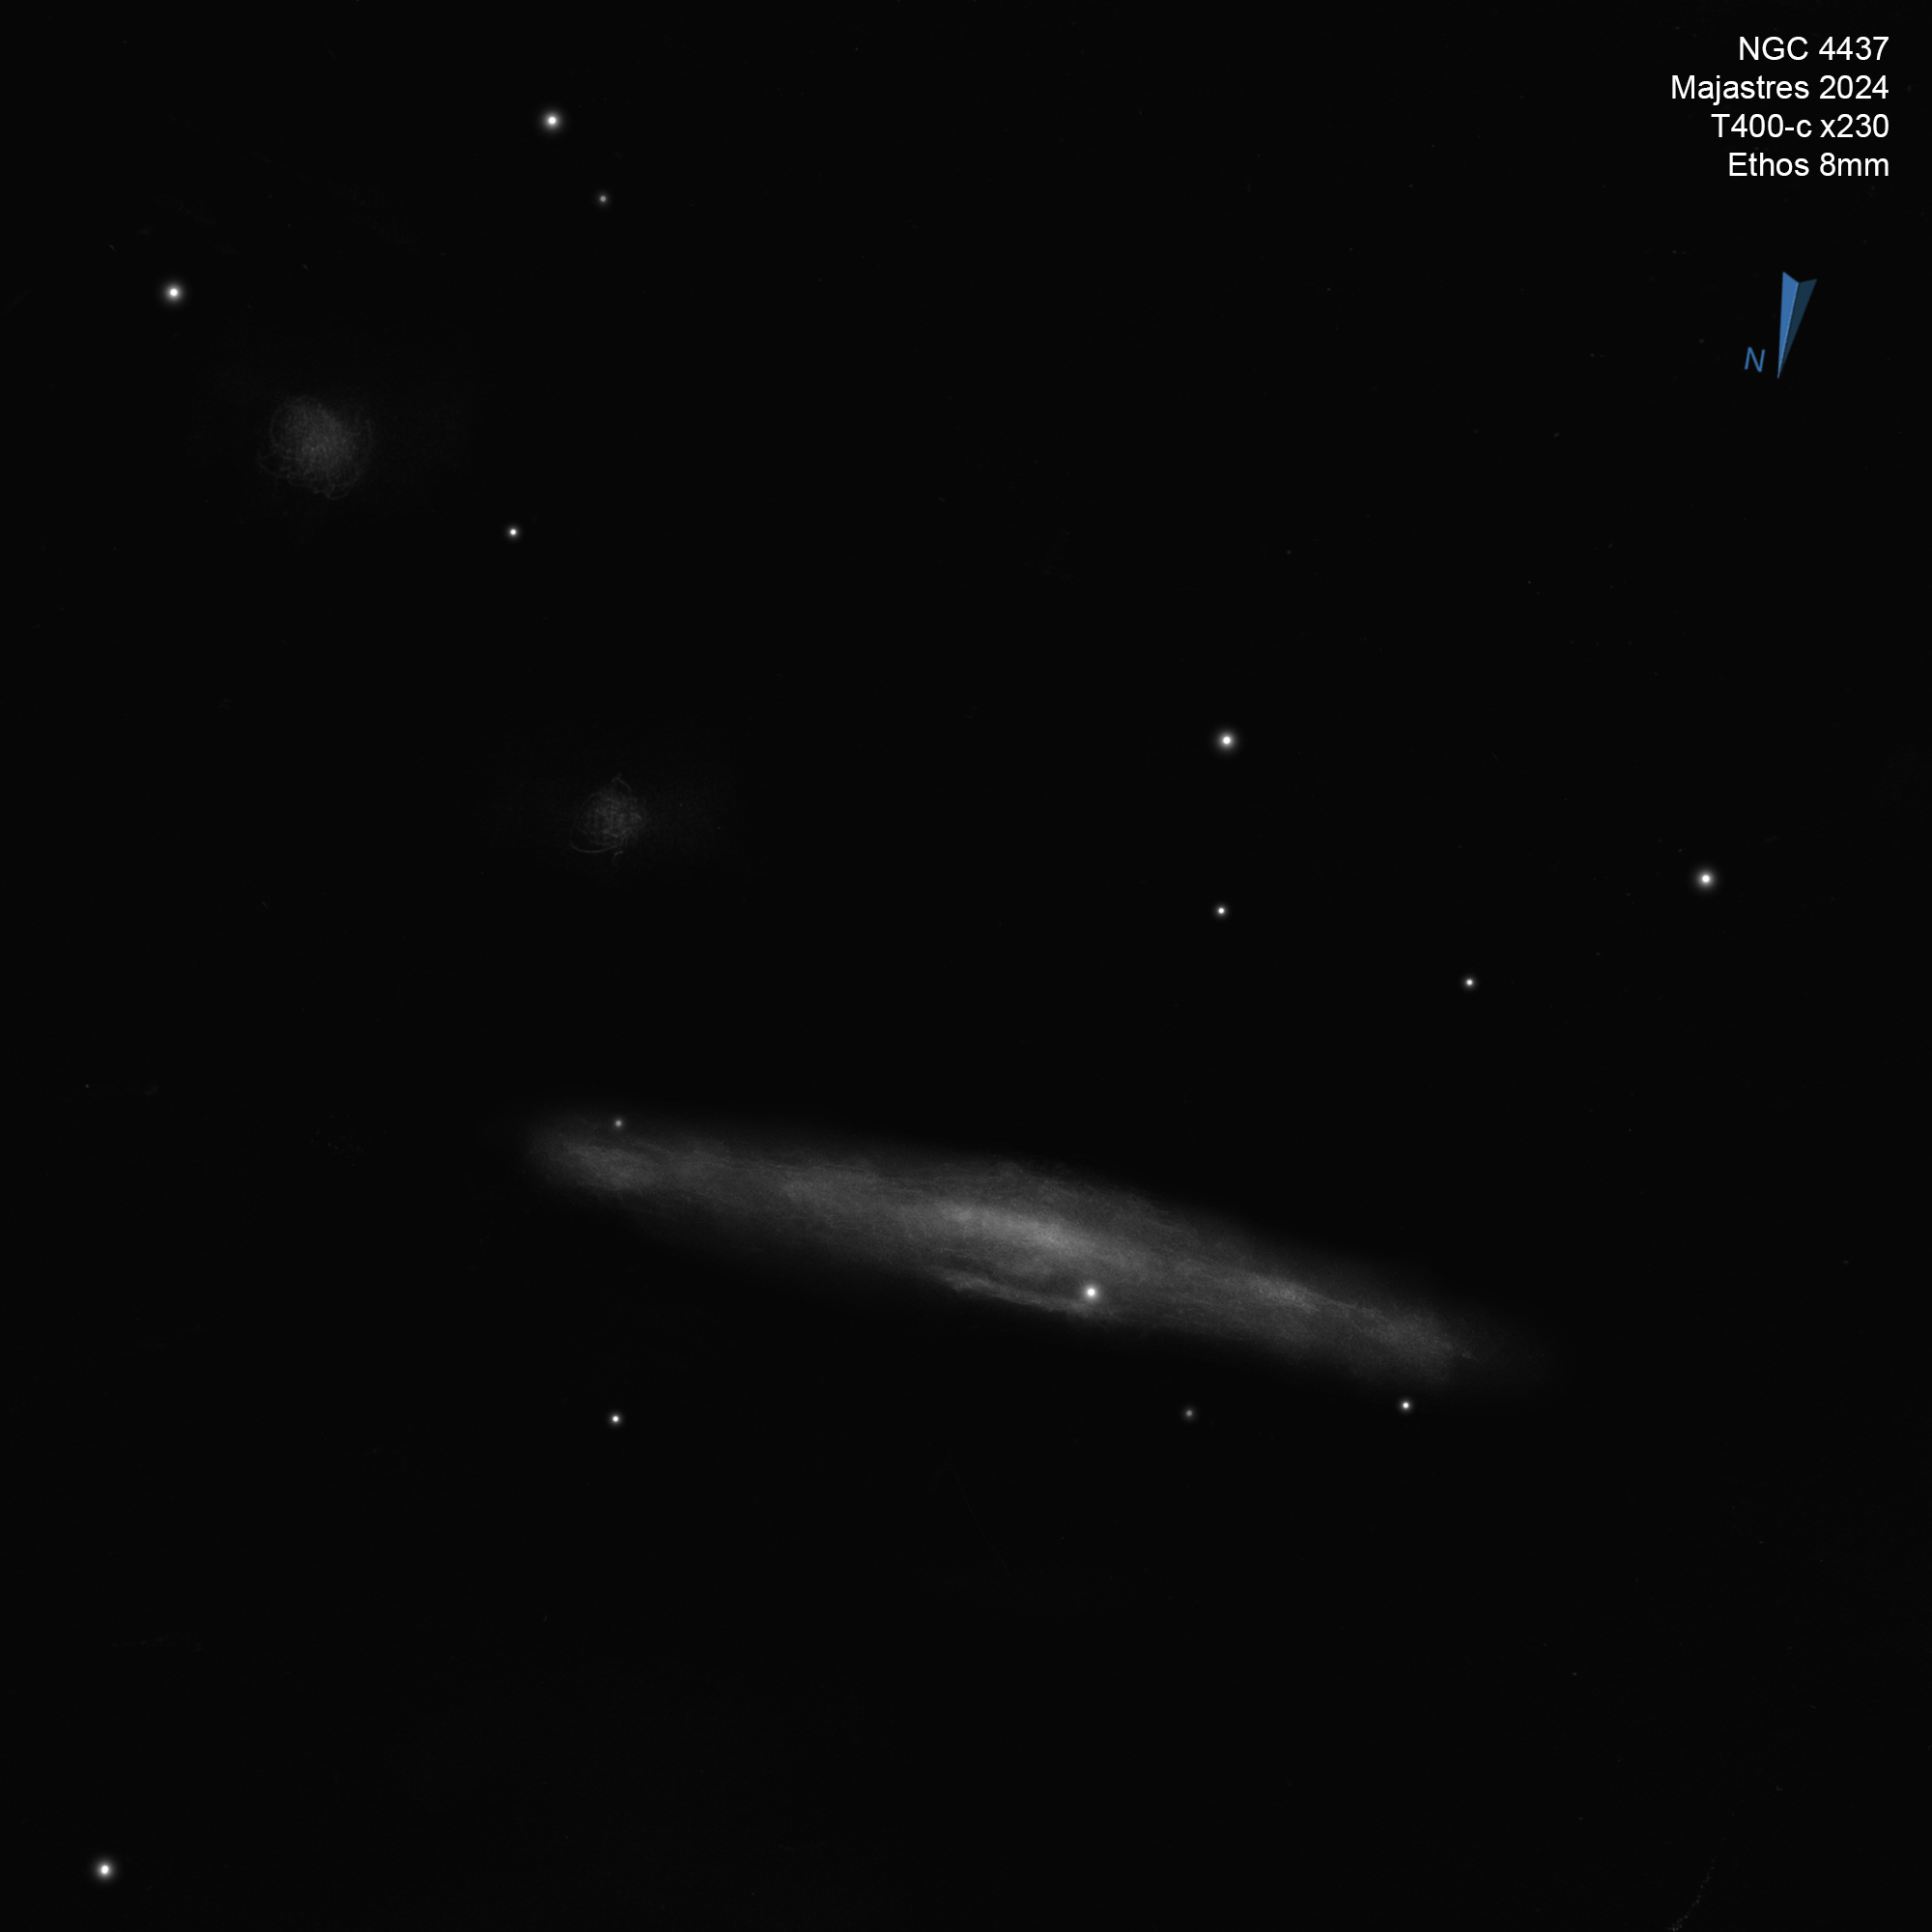 NGC4437_24.jpg